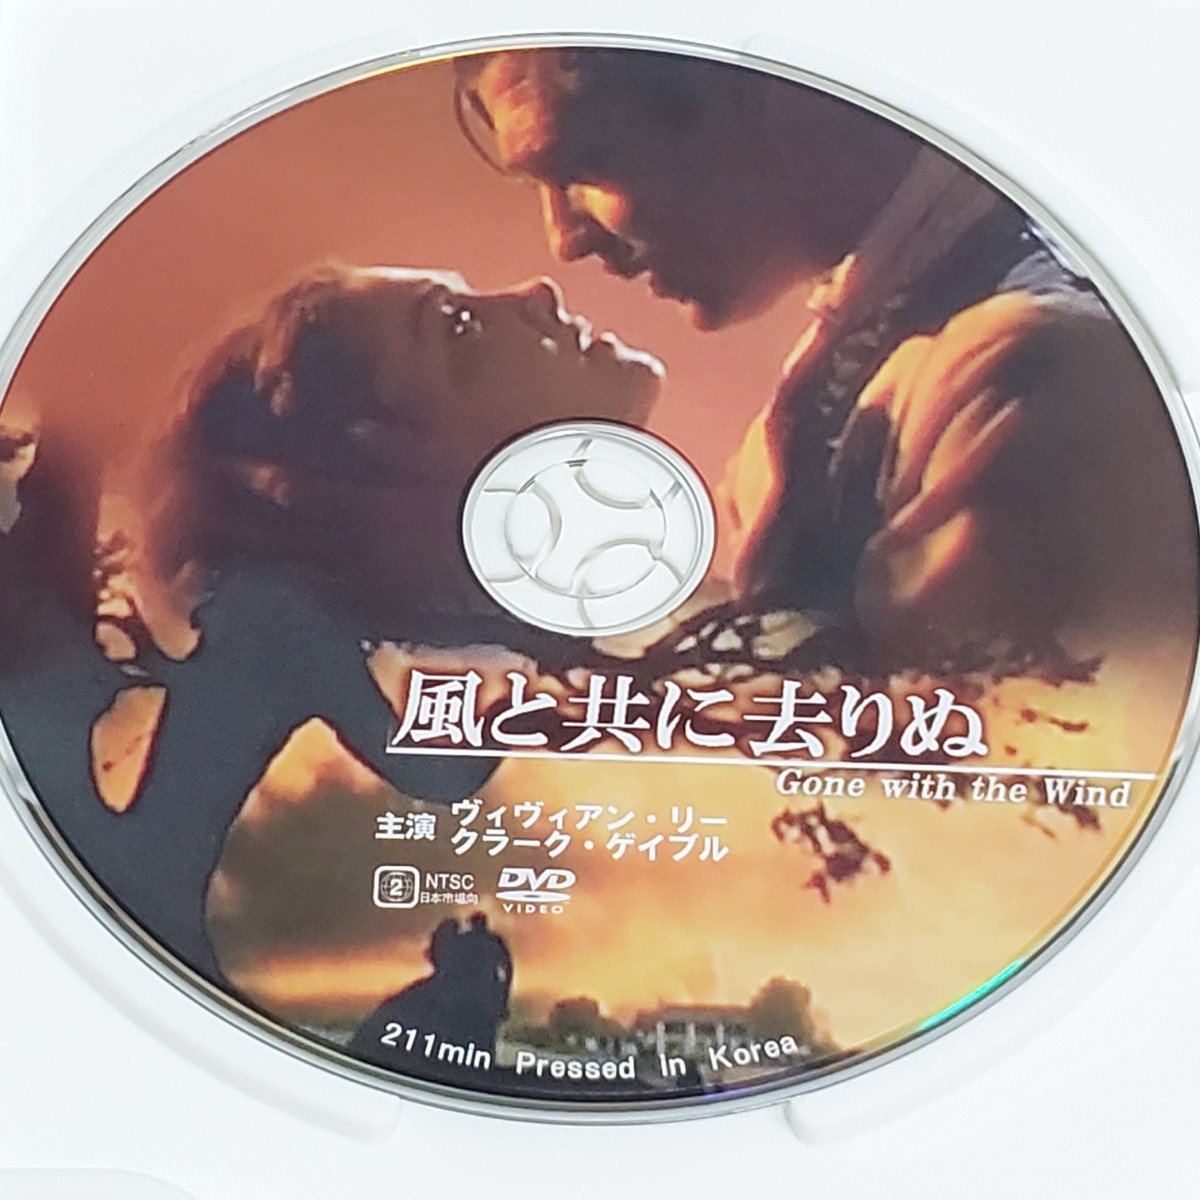 【DVD】特別名画 ベストセレクション 風と共に去りぬ 嵐が丘 カサブランカ 3枚組 ユーズド品